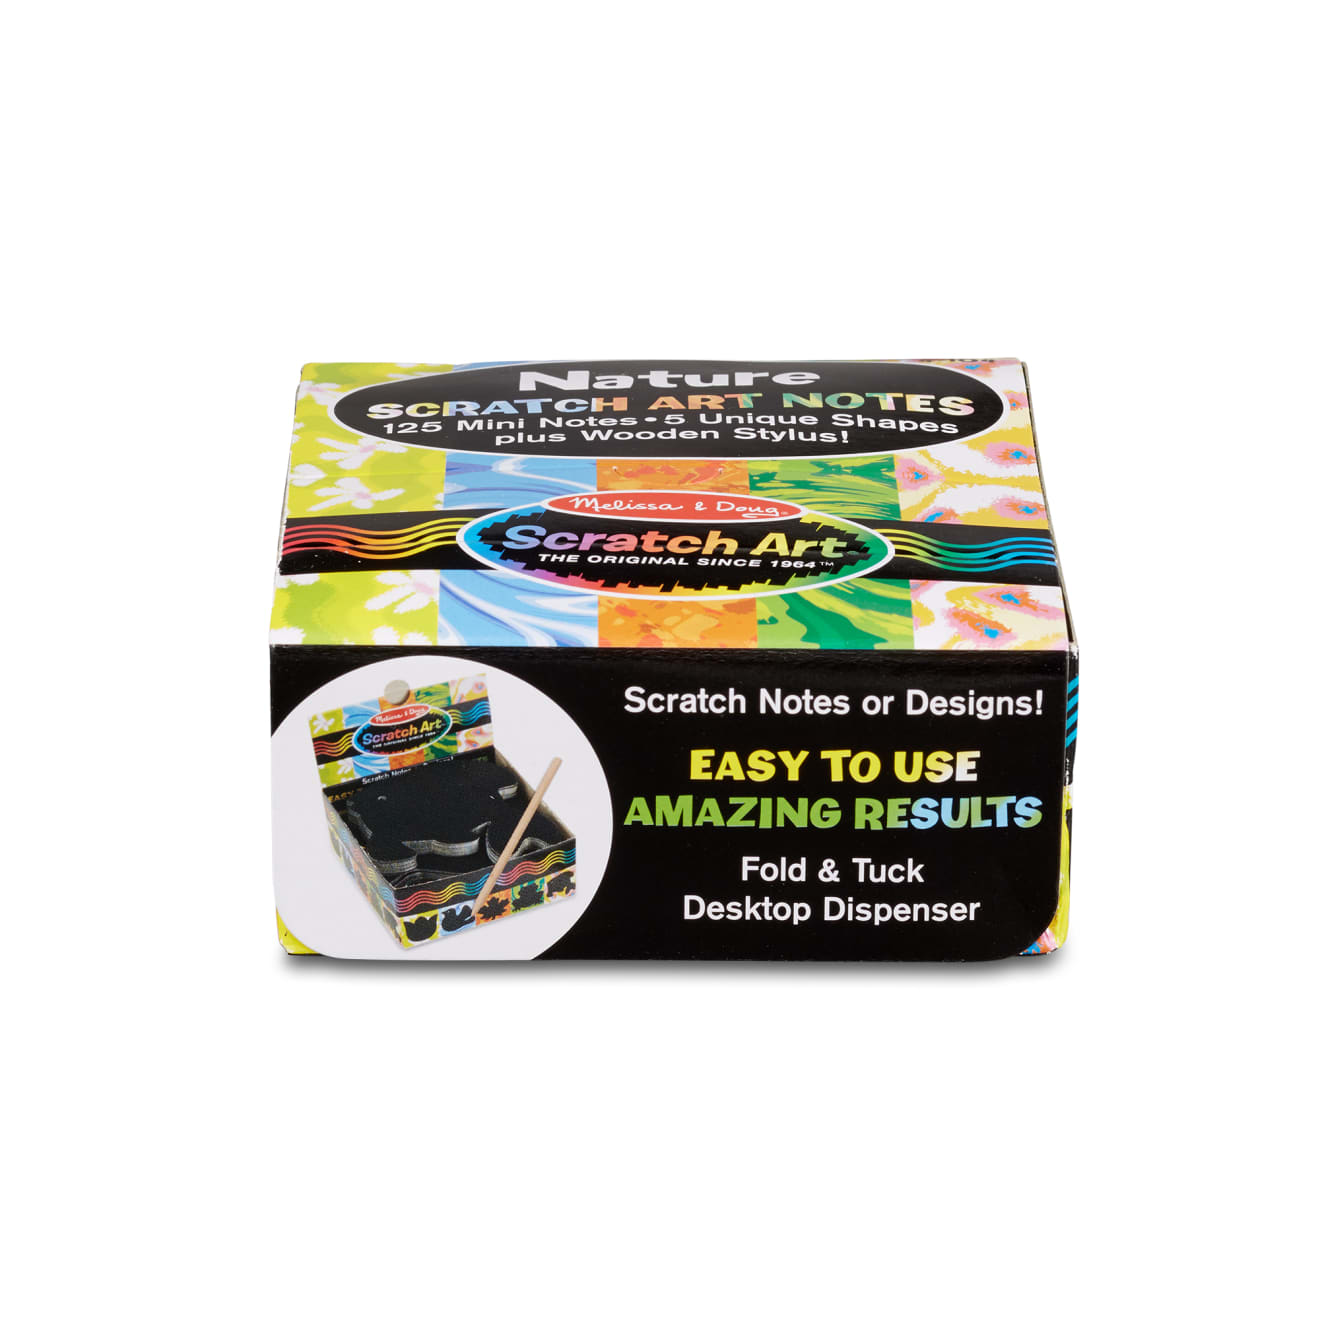 Melissa & Doug® Scratch Art® Box of Rainbow Mini Notes